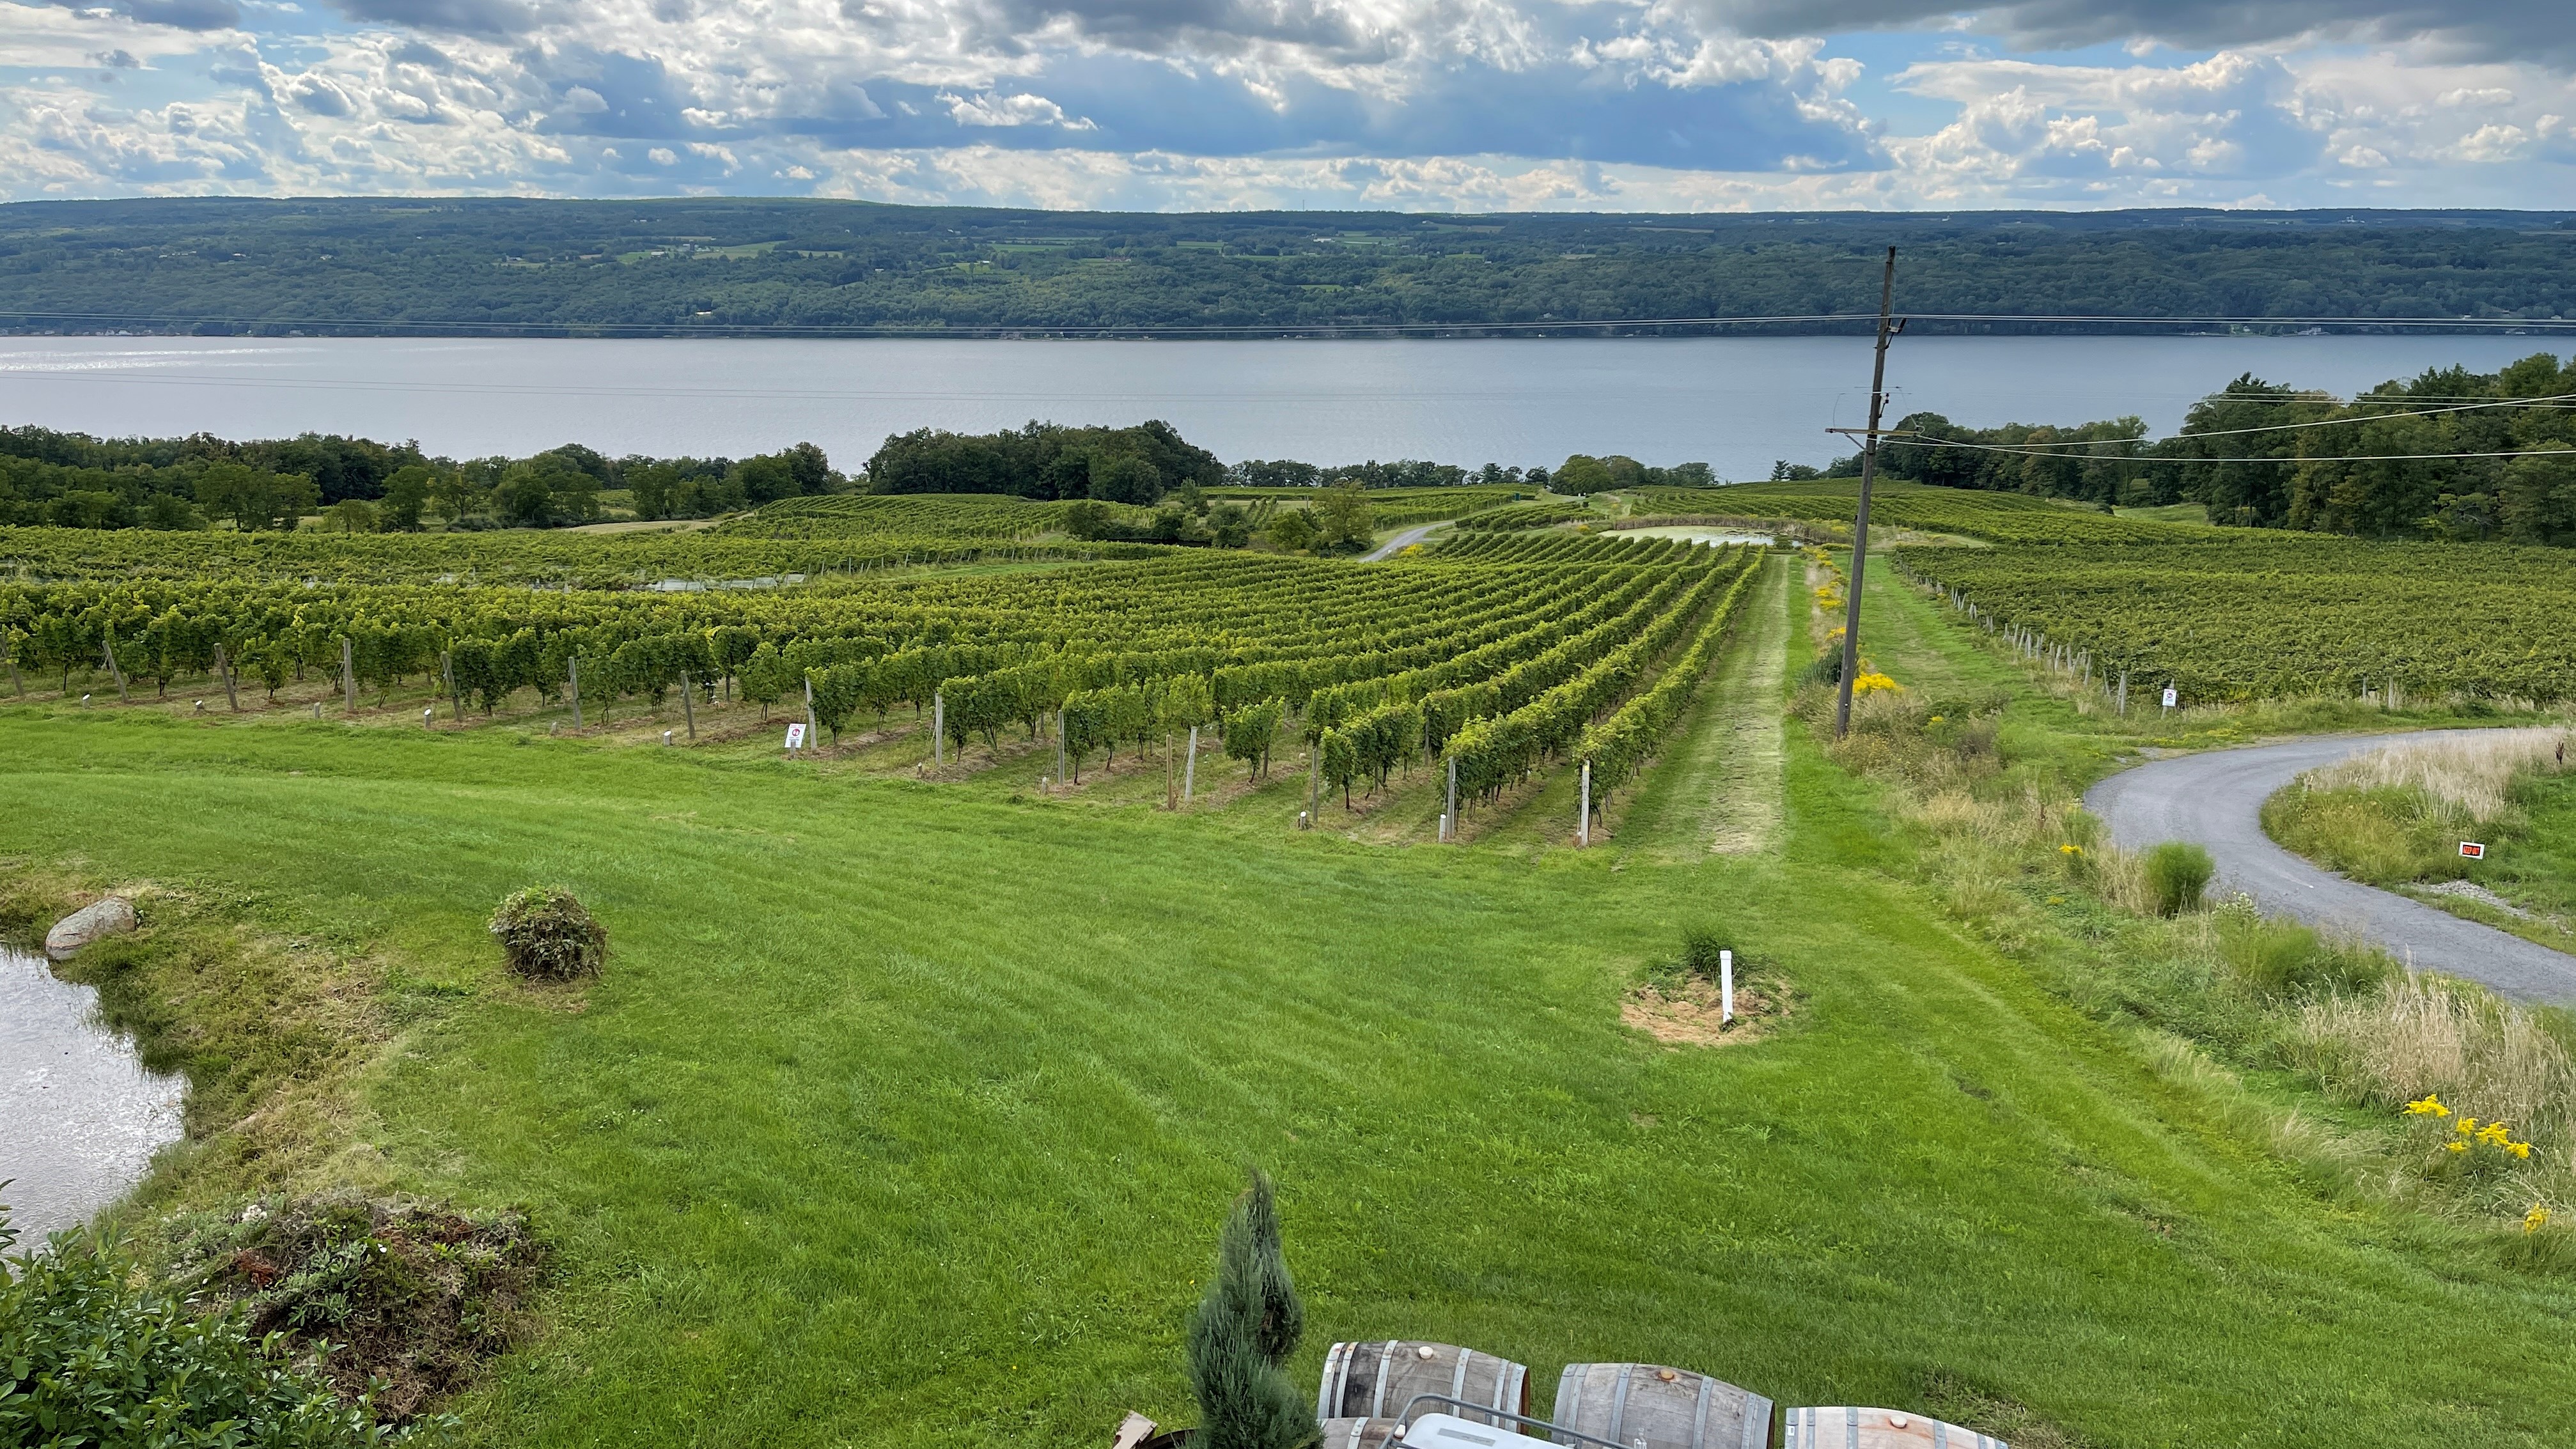 Winery Views - Senior Trip to the Finger Lakes